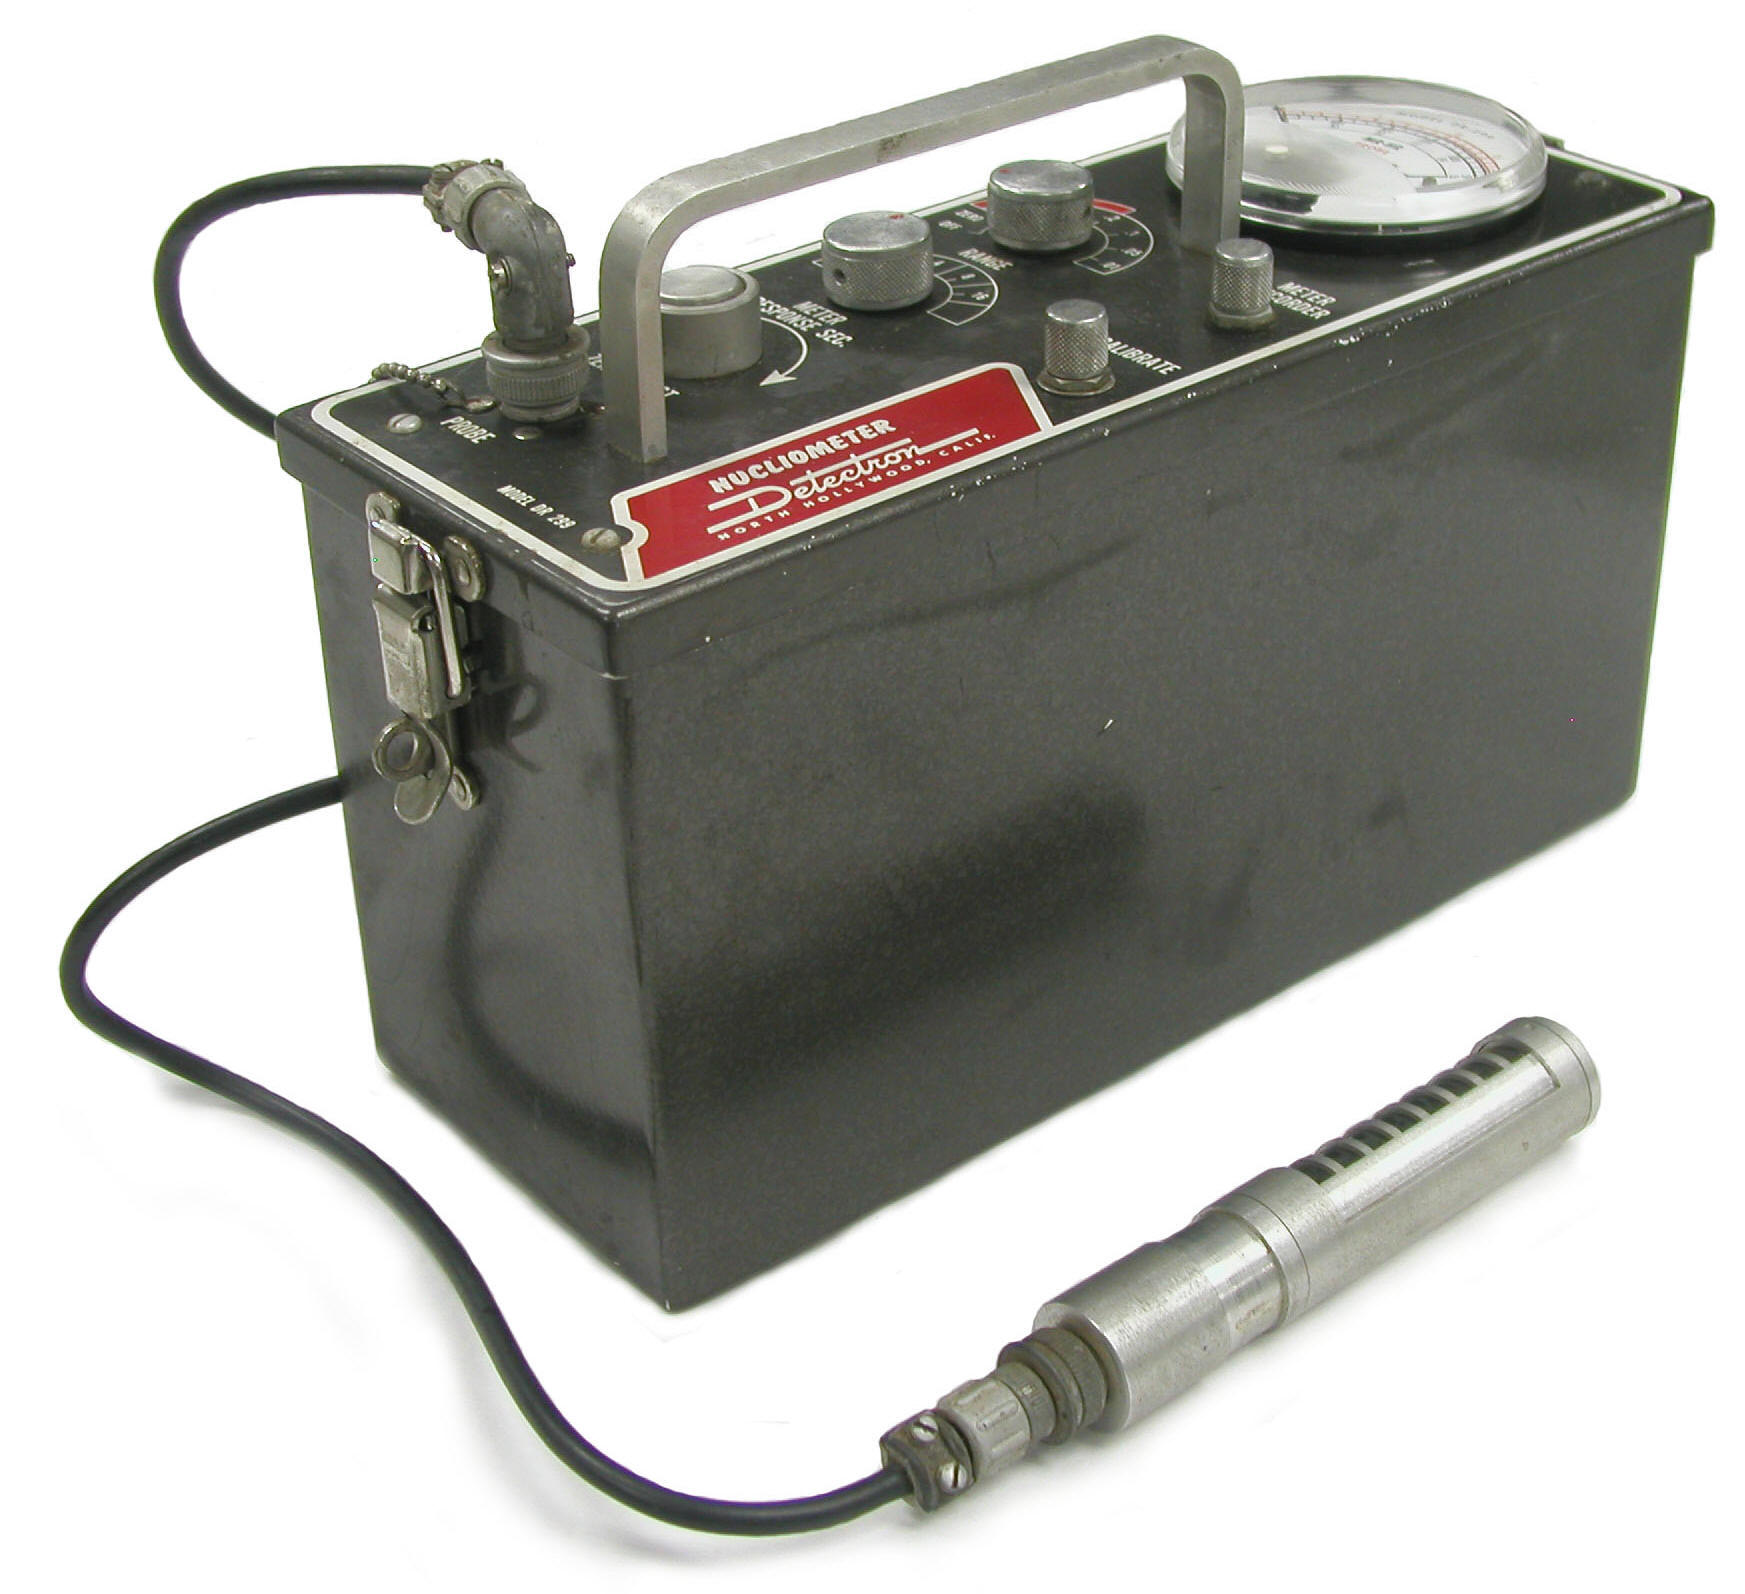 Detectron Nucliometer Model DR-299 Geiger Mueller Survey Meter (ca. 1955)